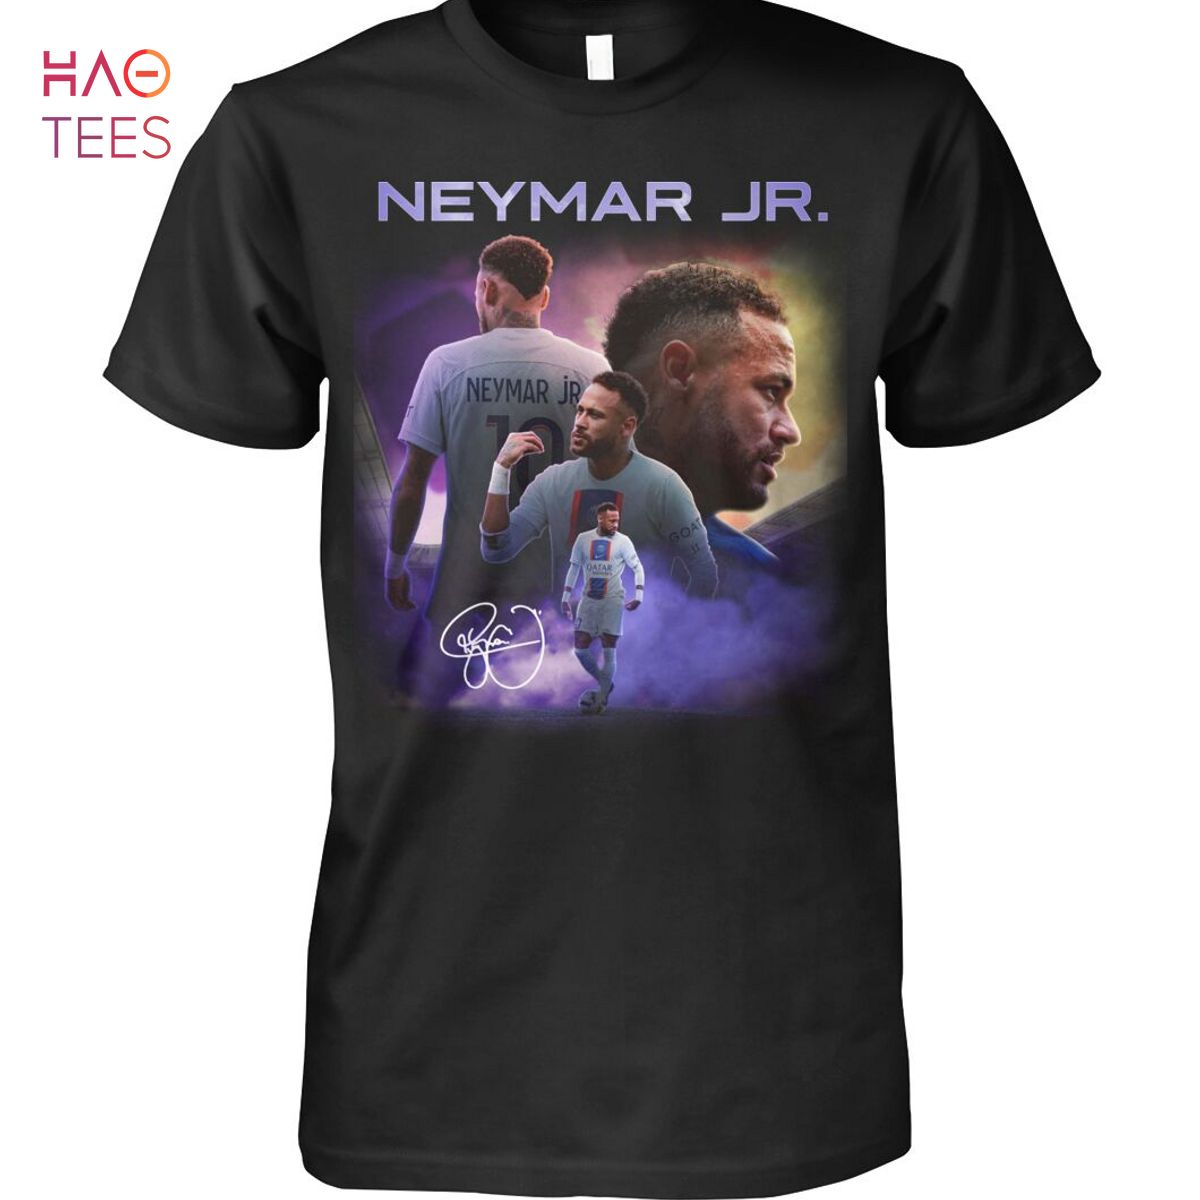 HOT Neymar JR Shirt Limited Edition